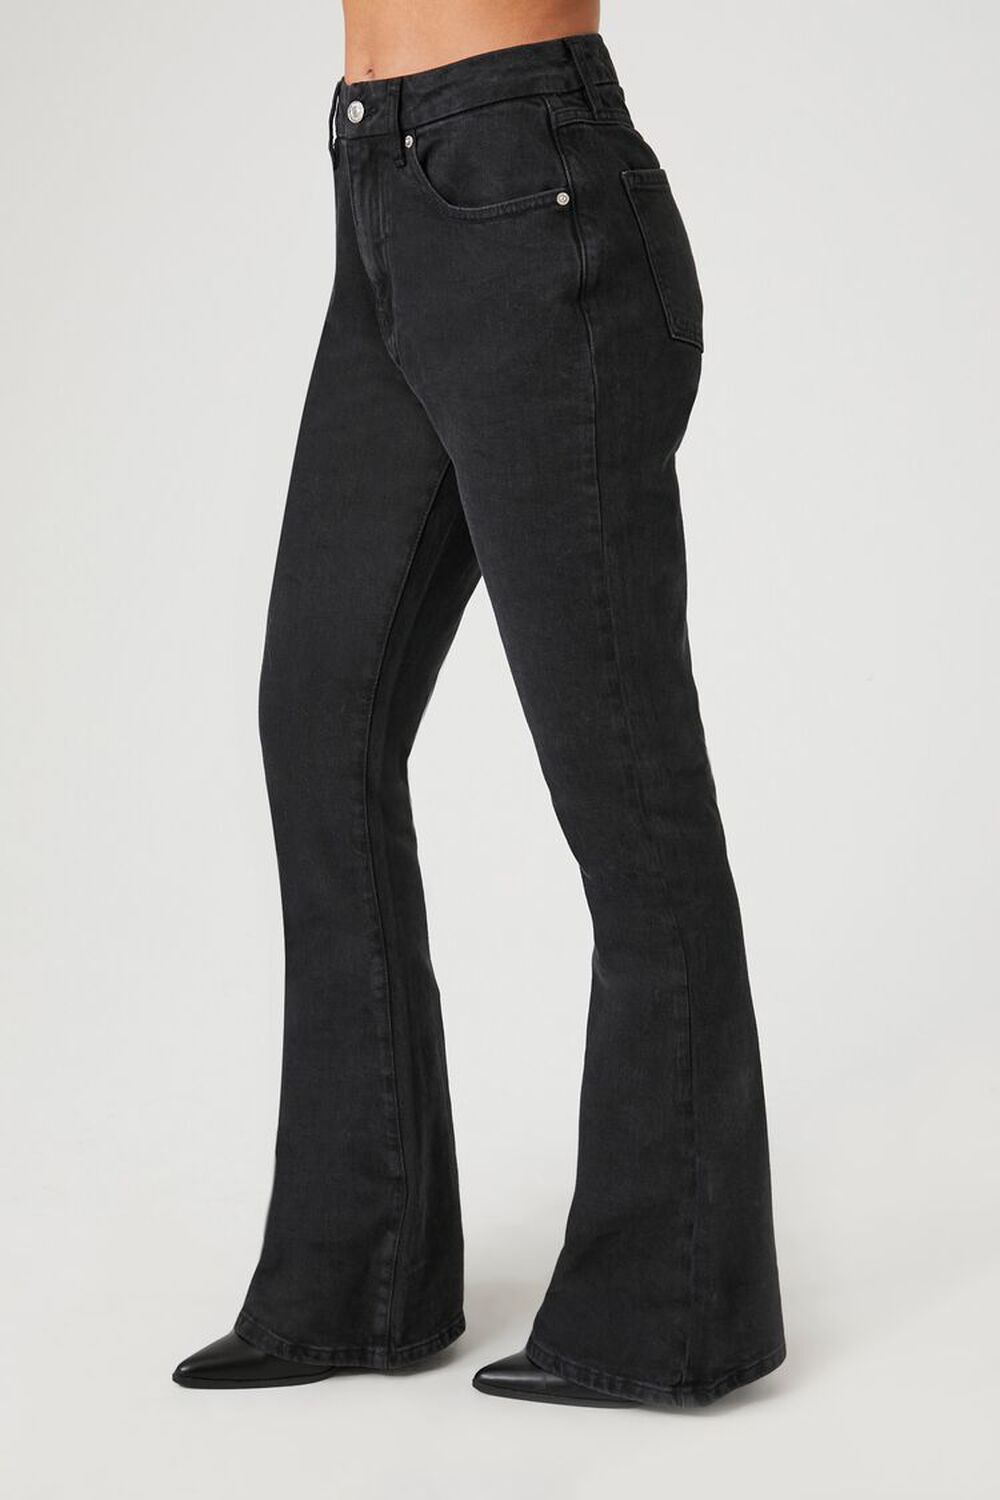 BLACK Curvy Mid-Rise Flare Jeans, image 2